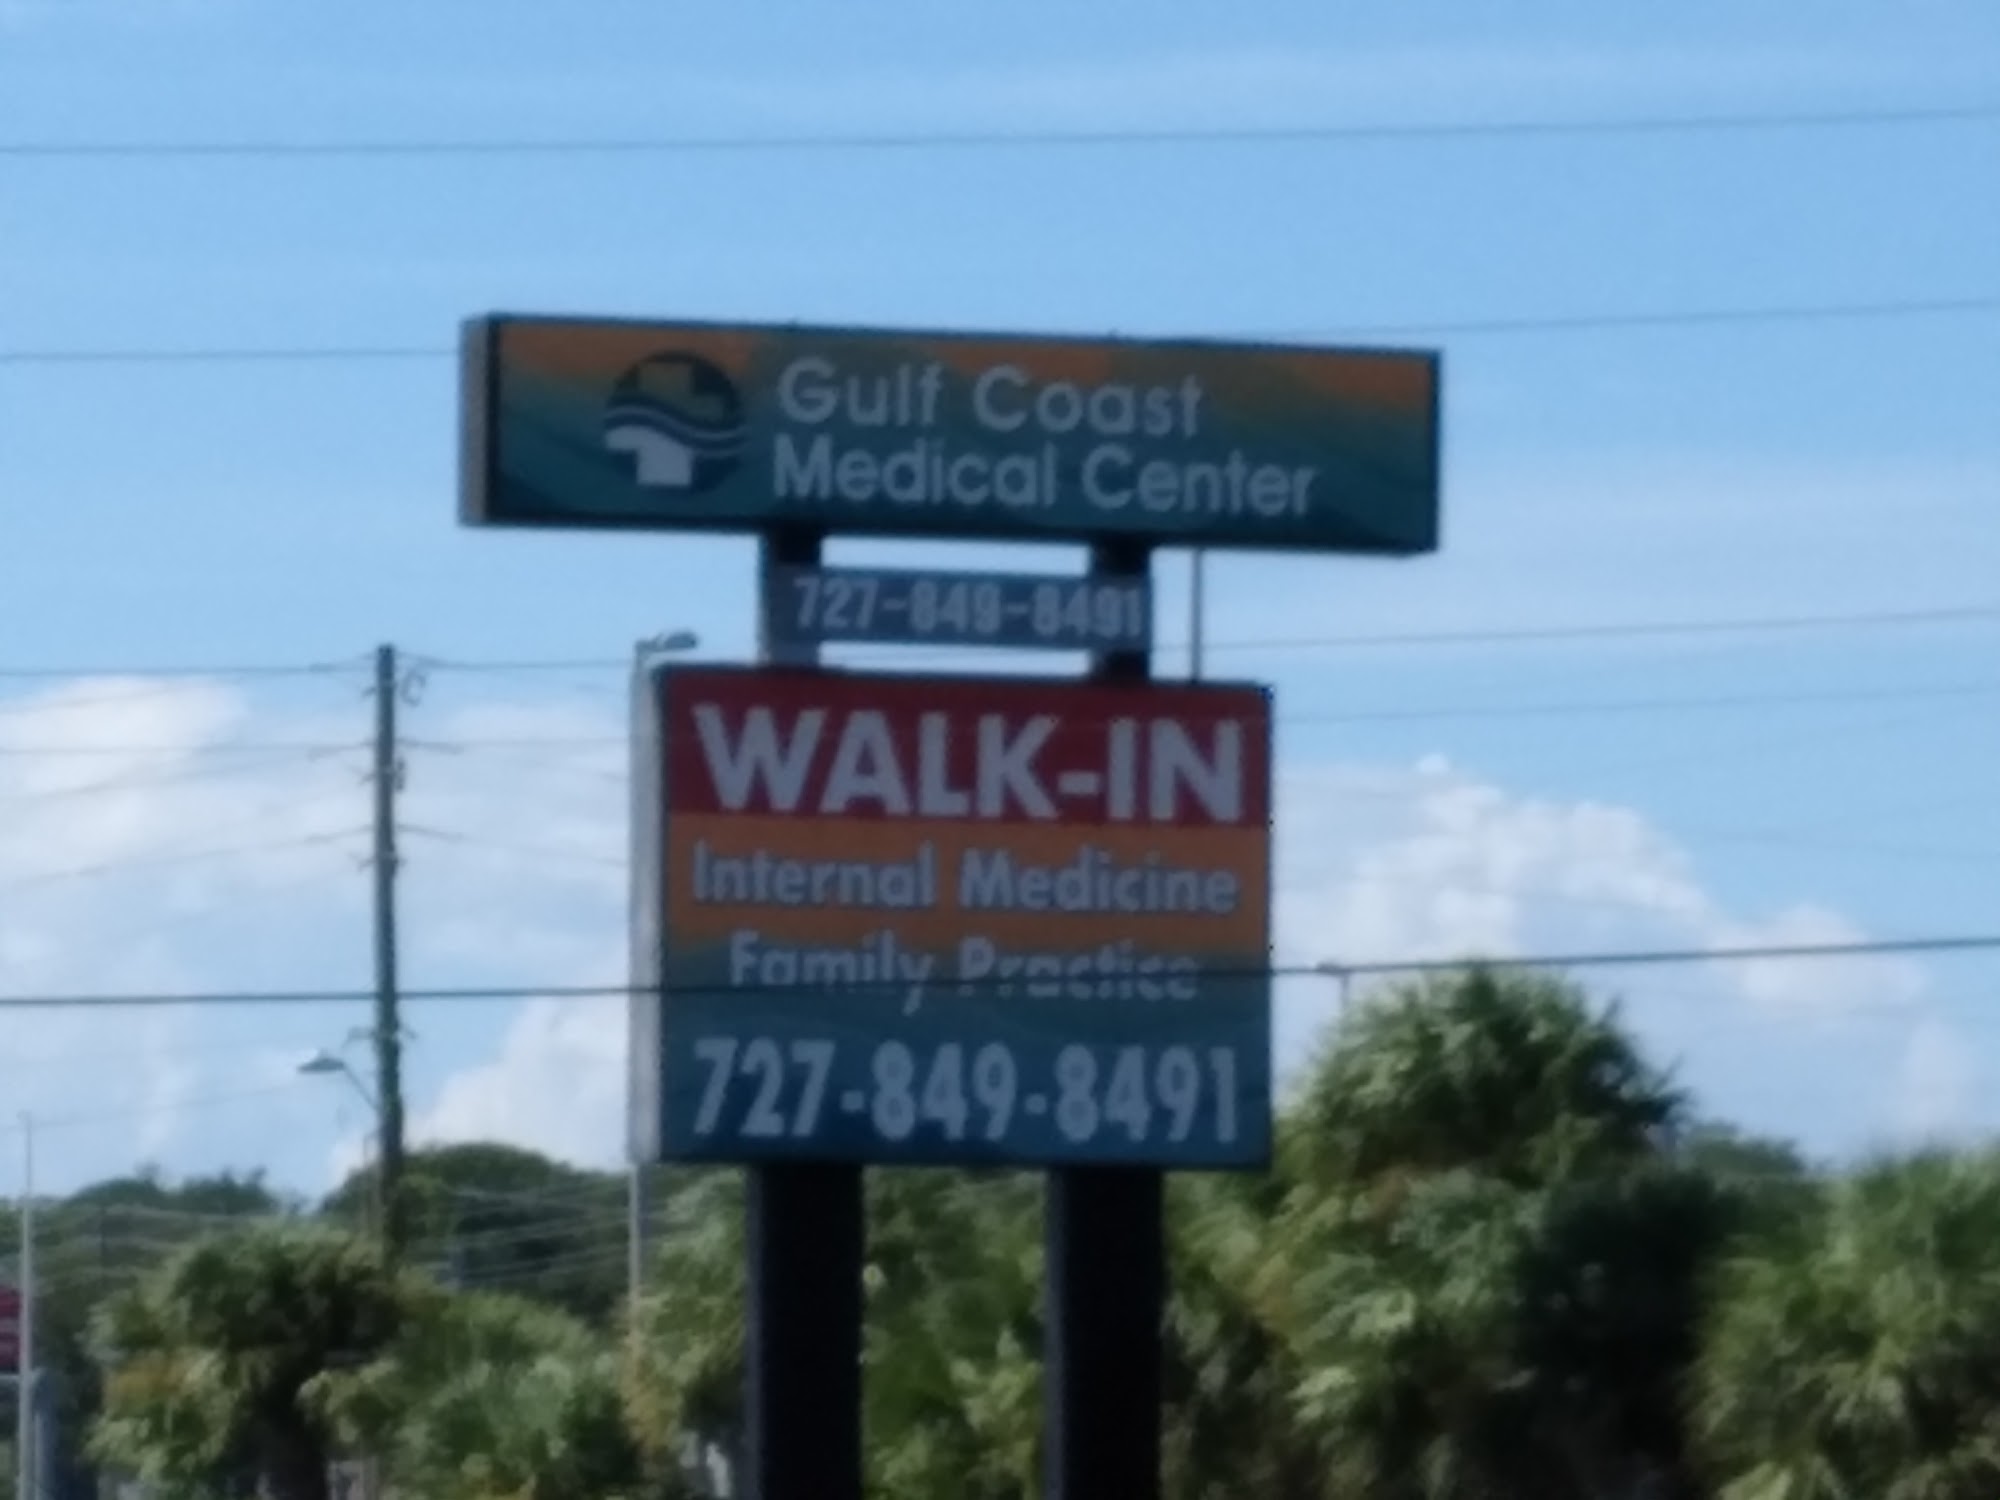 Gulf Coast Medical Center: Toth Norman DO